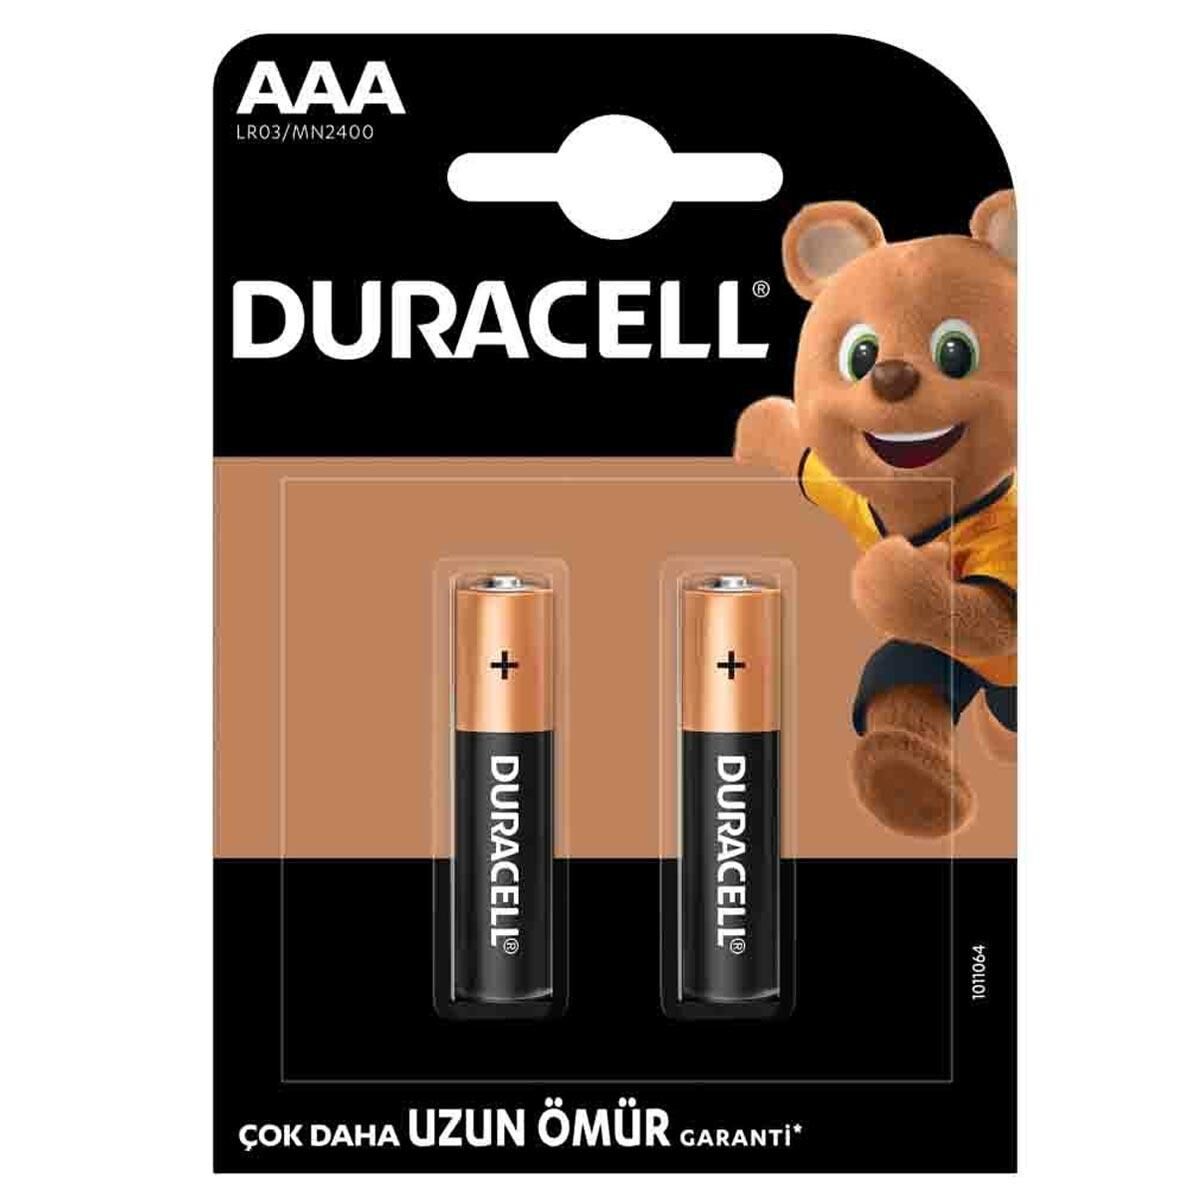 Duracell LR03/MN2400 Alkalin AAA İnce Kalem Pil 2'li Paket